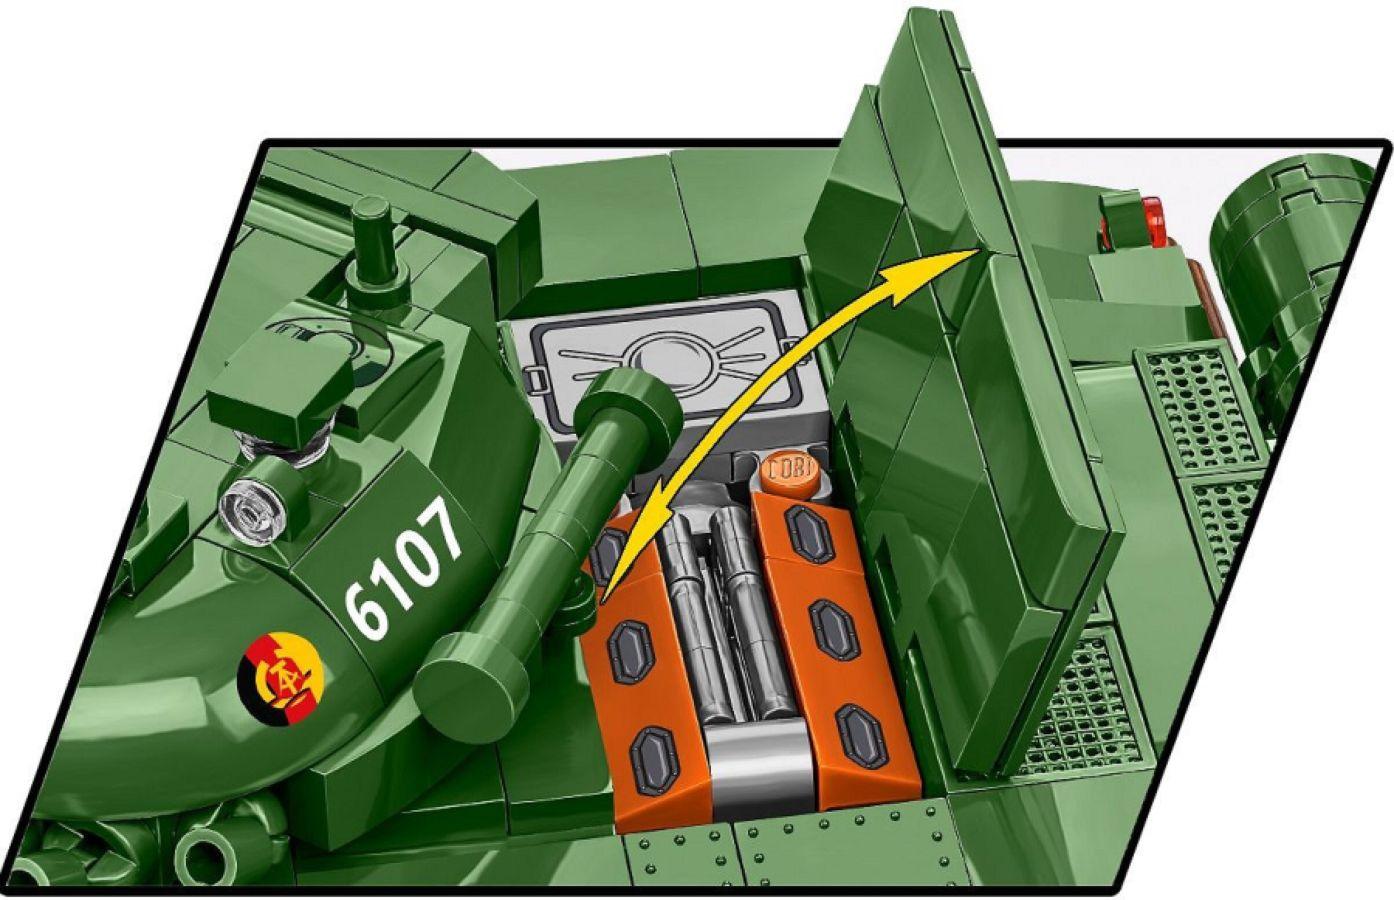 COB2625 Armed Forces - T-72 (East Germany/Soviet) (680 Piece Kit) - Cobi - Titan Pop Culture